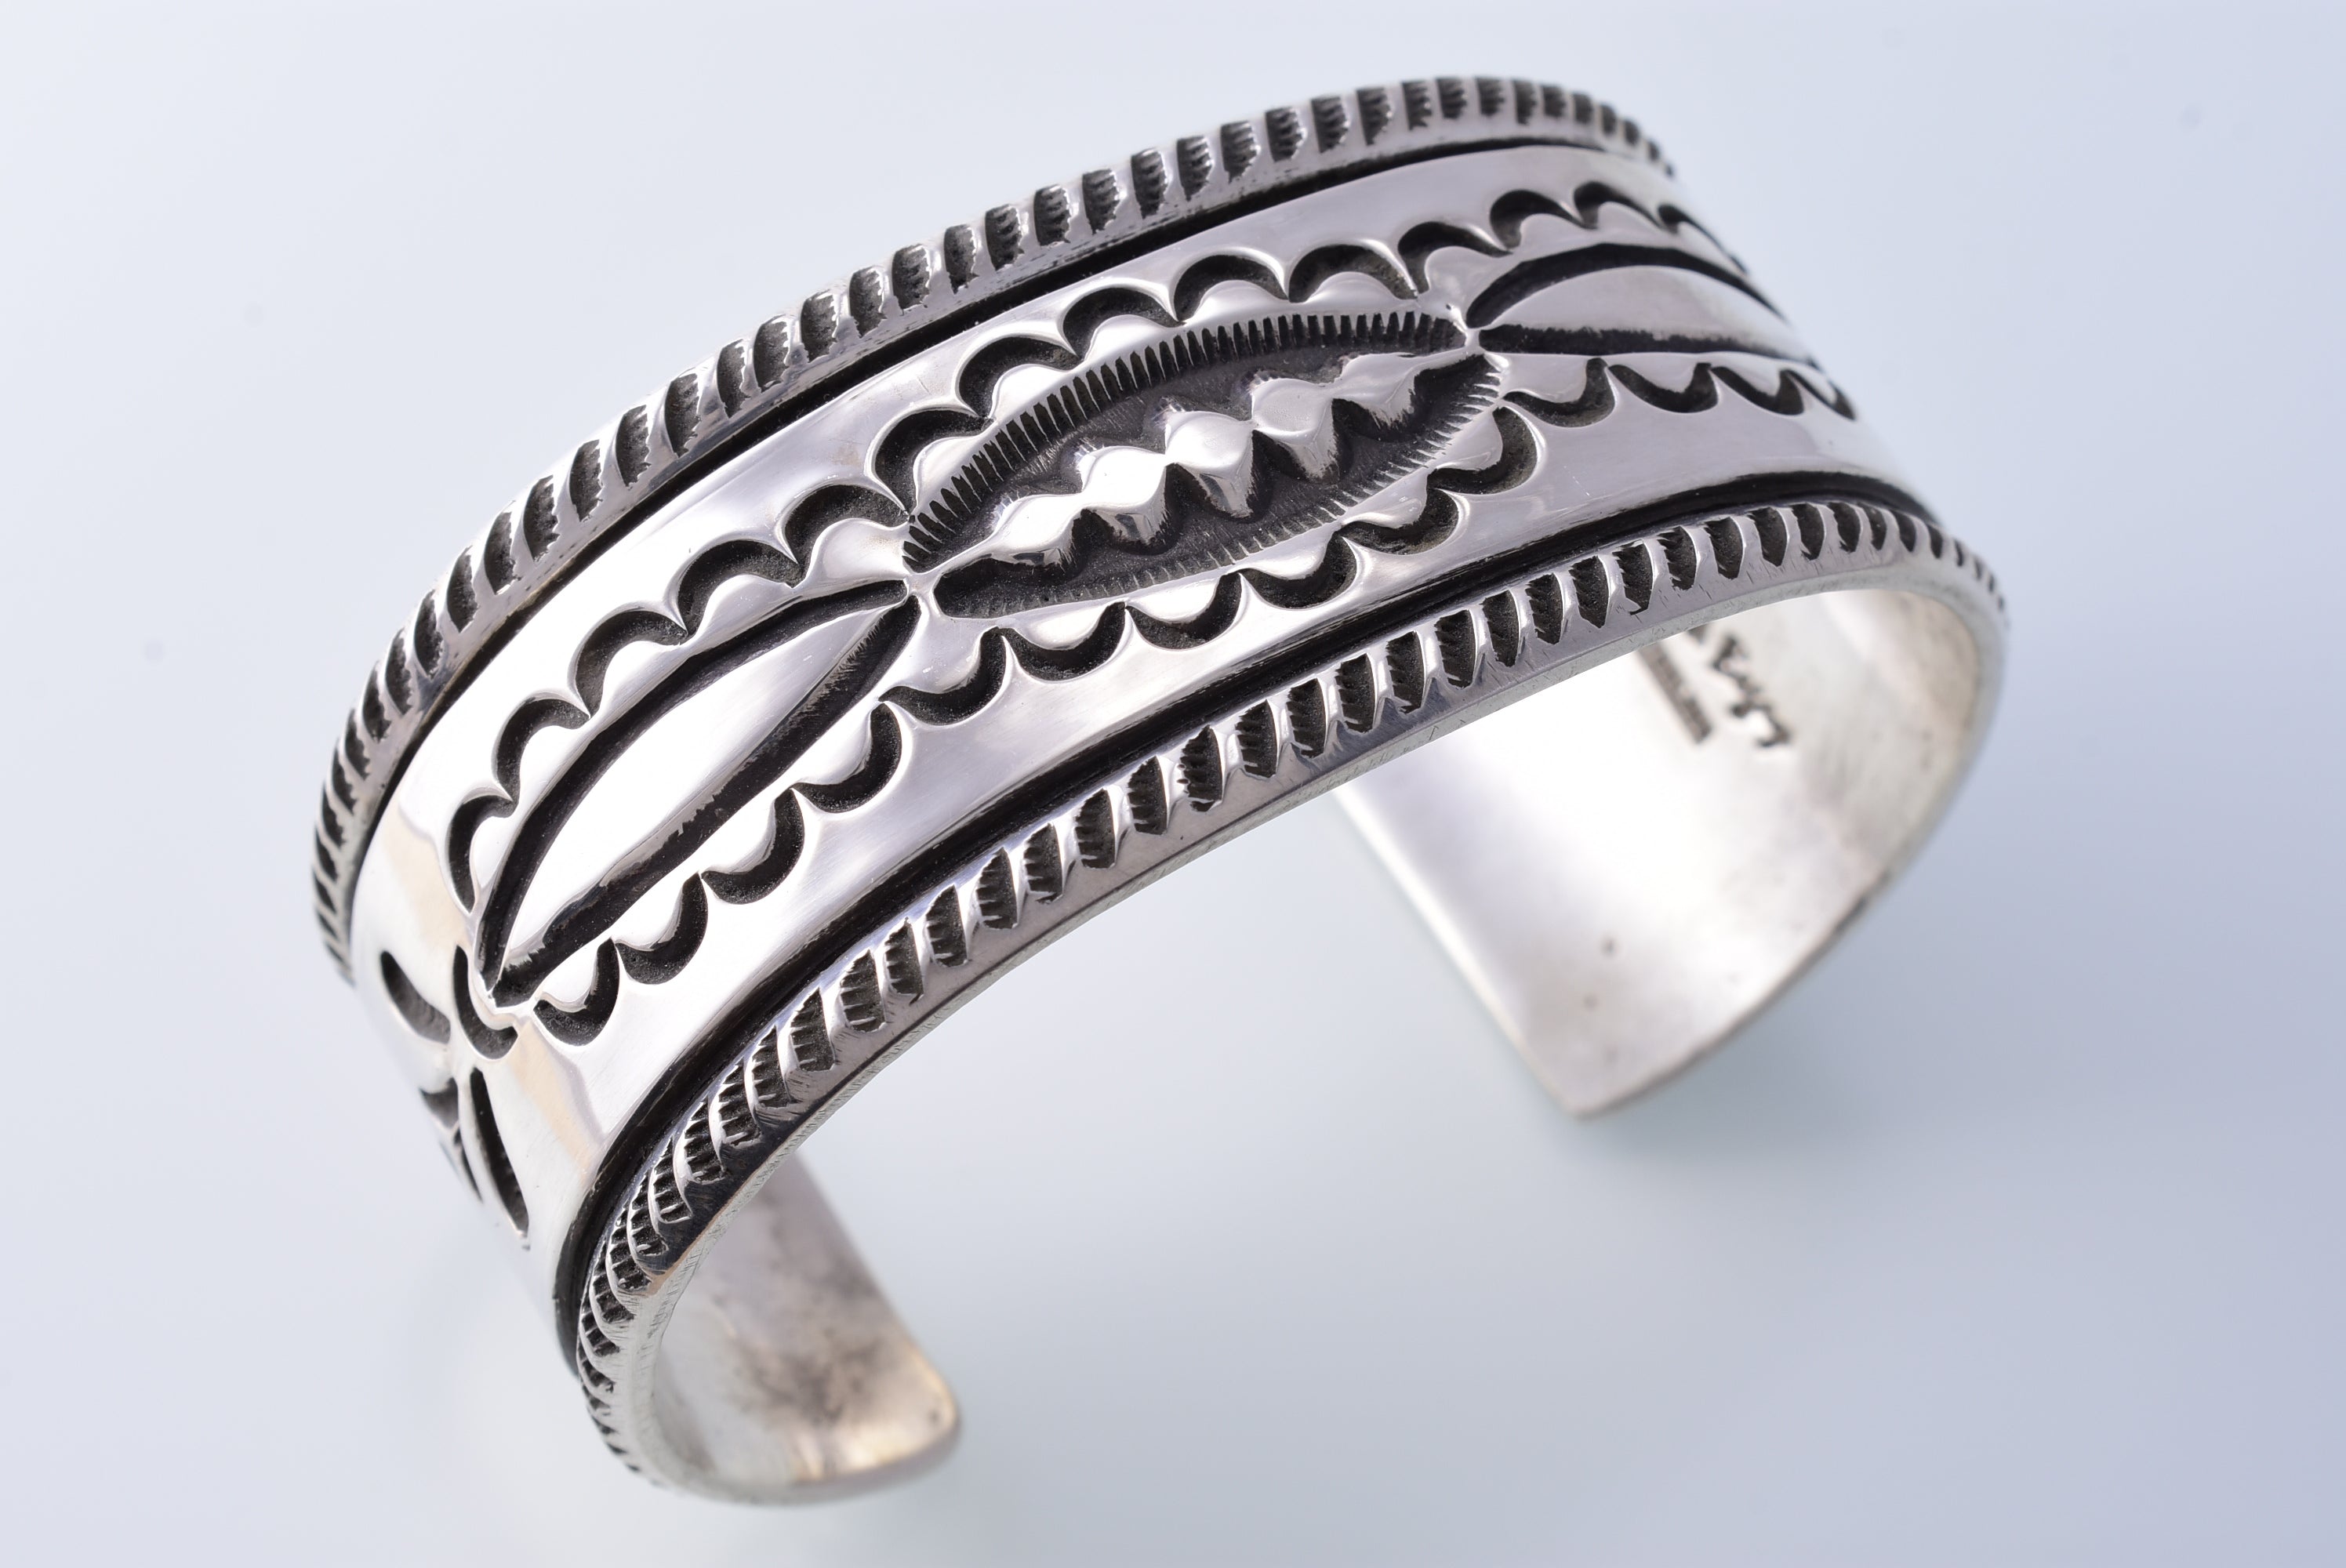 Silver Navajo Handfiled Concho Design Bracelet by Erick Begay 3H21G